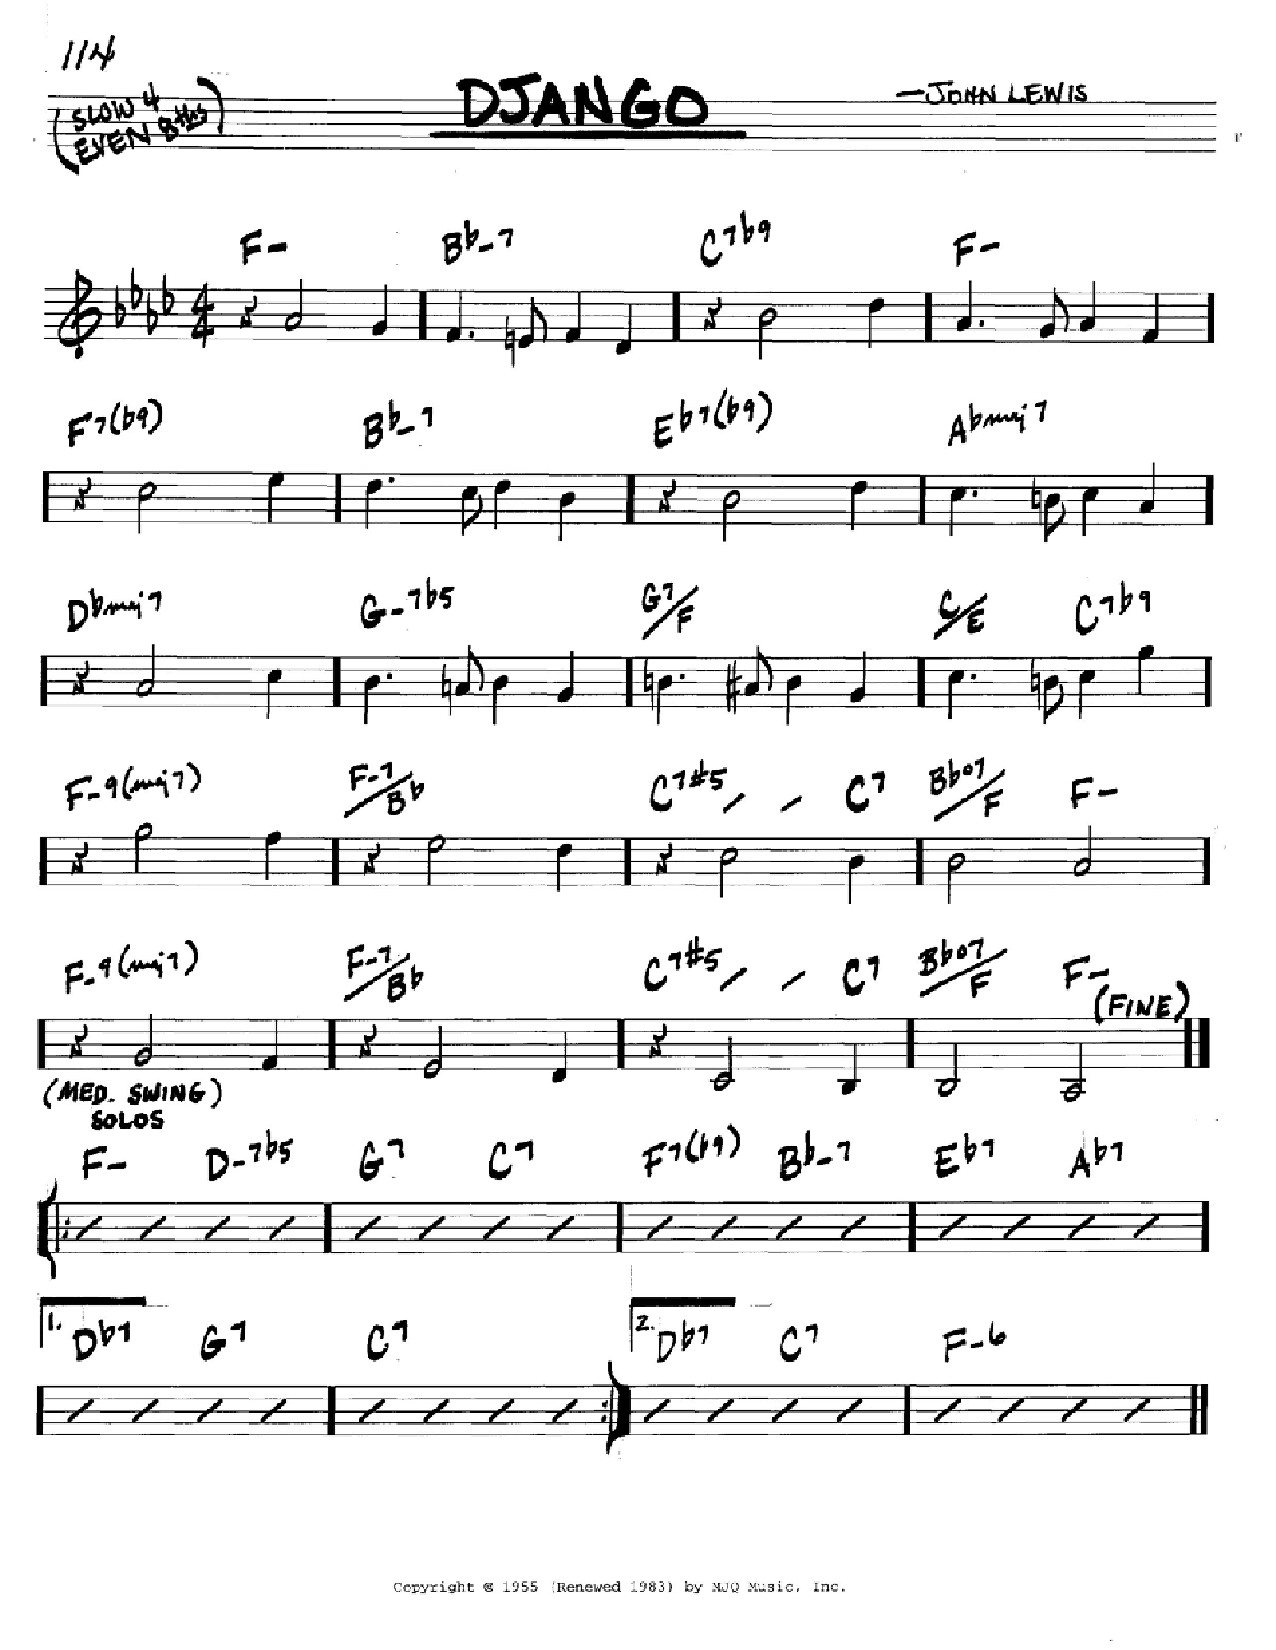 John Lewis Django Sheet Music Notes & Chords for Real Book - Melody & Chords - C Instruments - Download or Print PDF